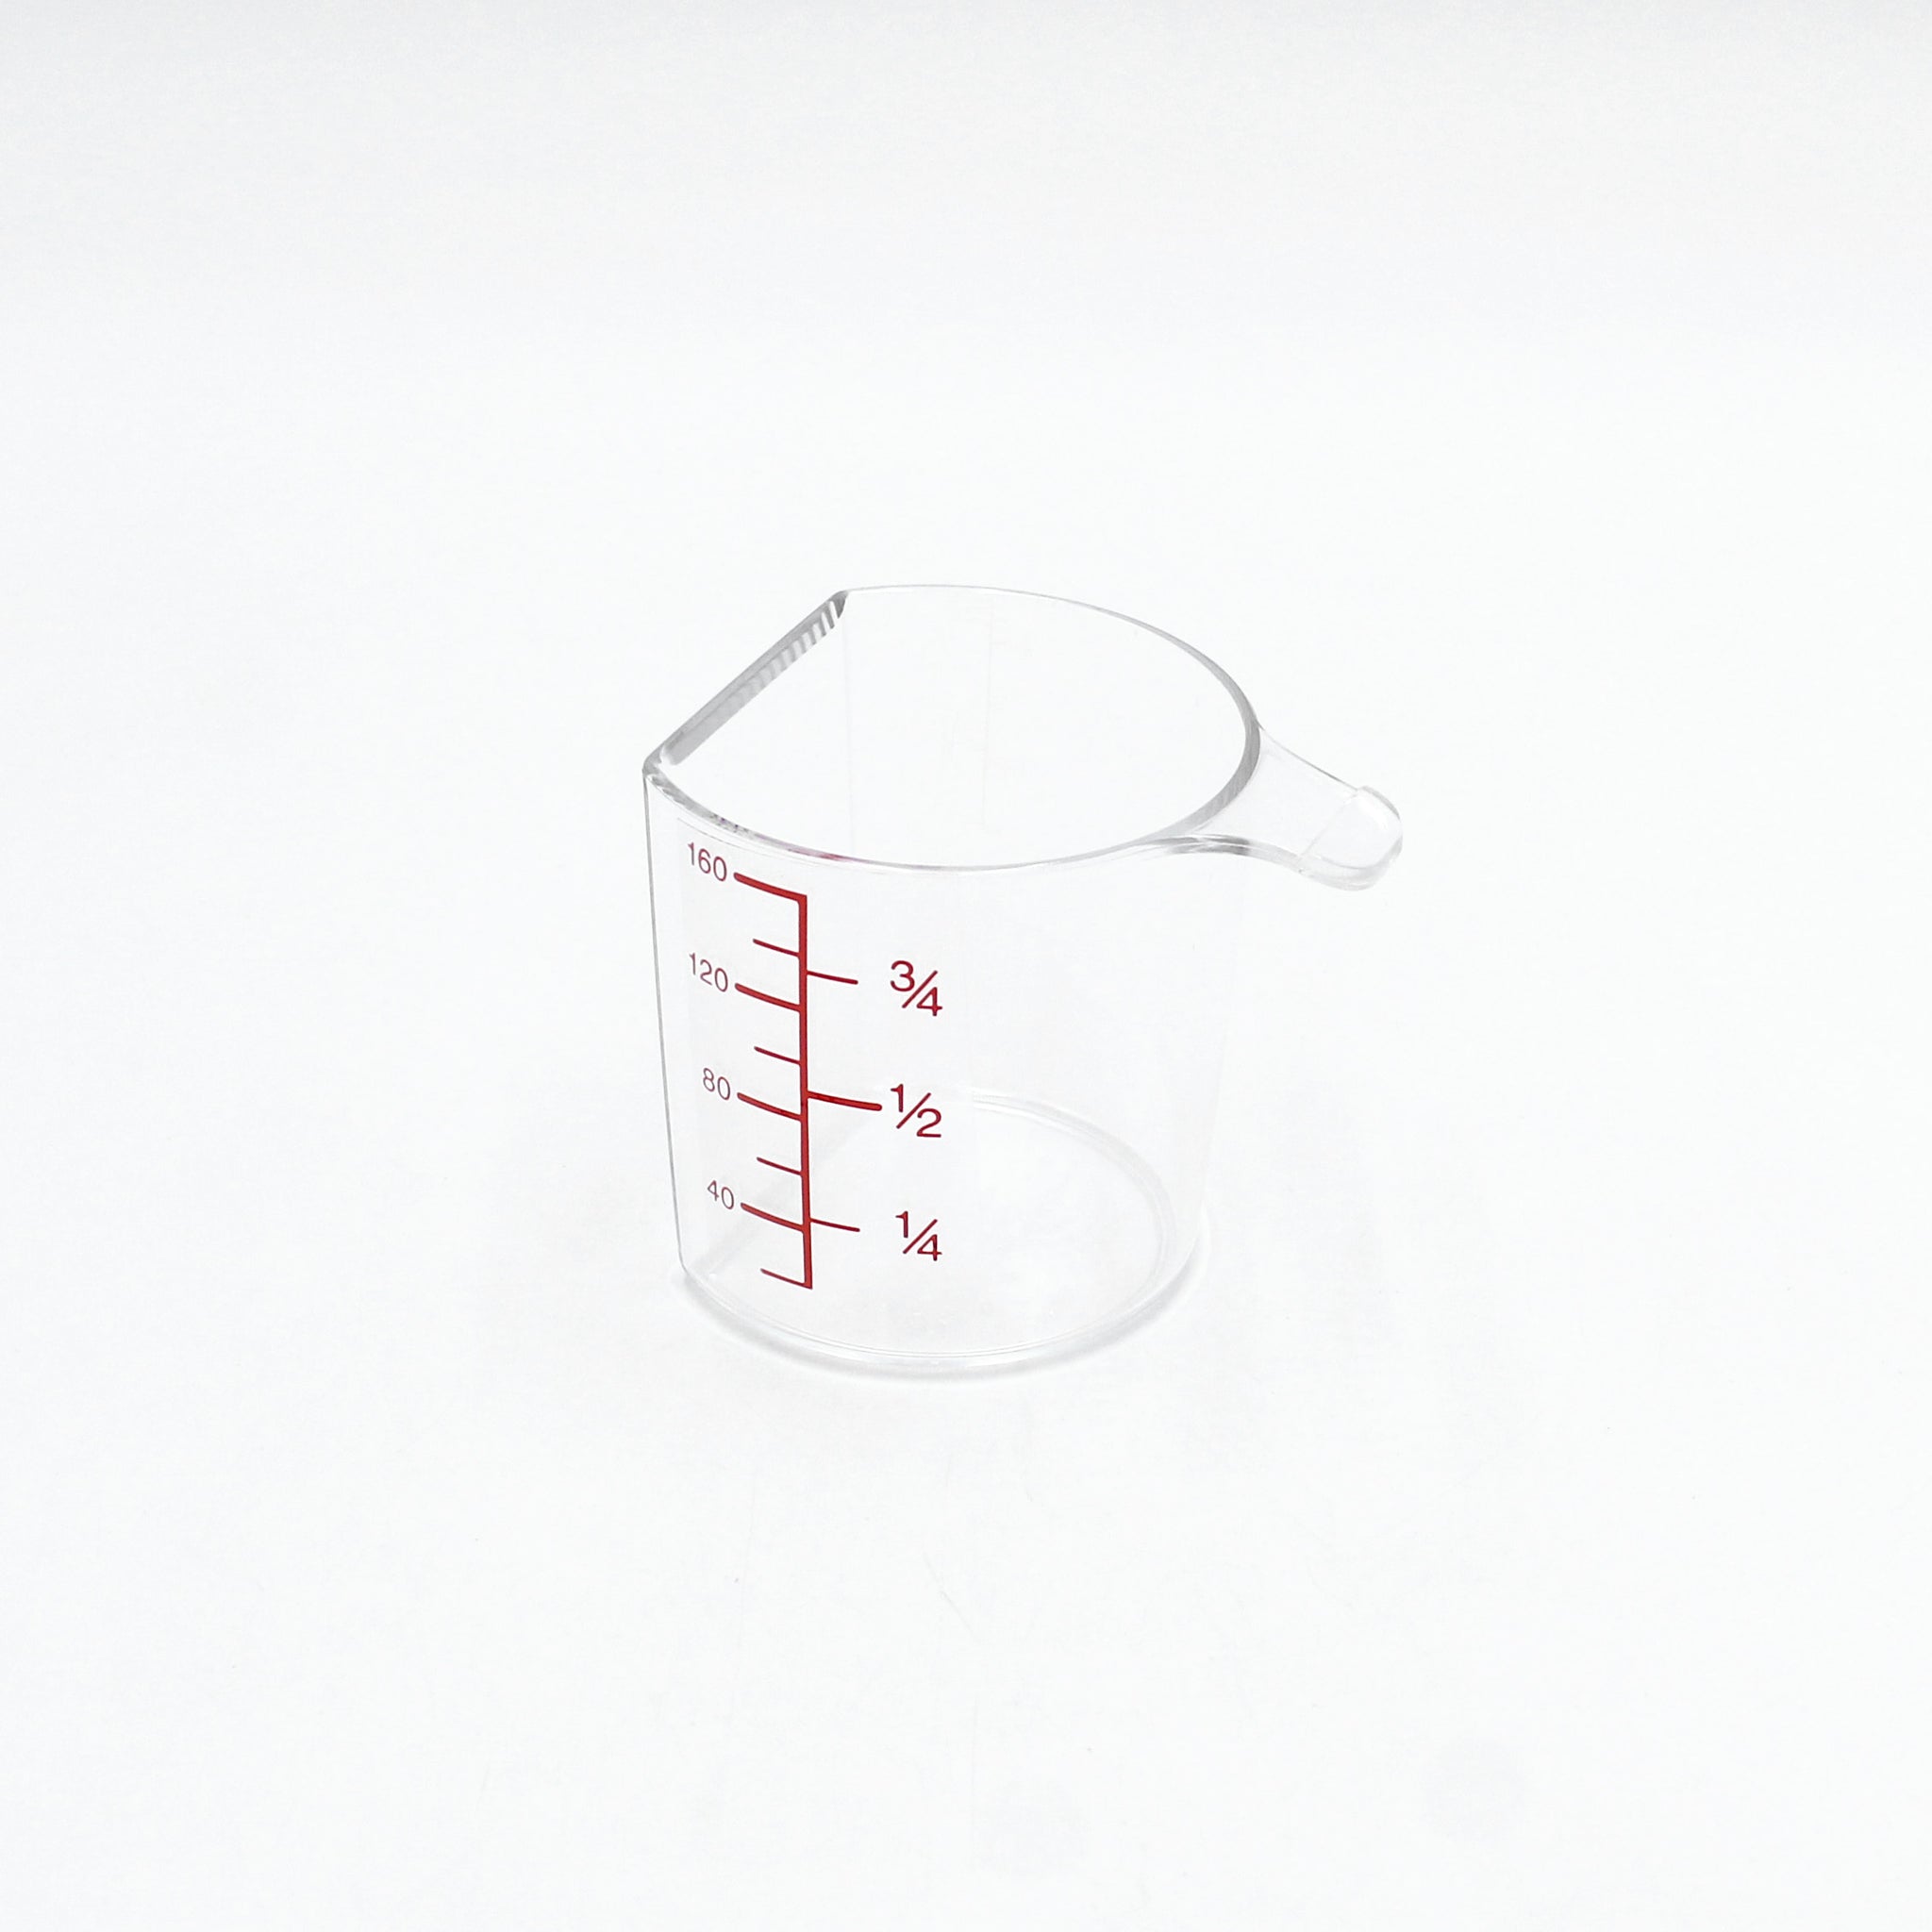 The Best Liquid Measuring Cups